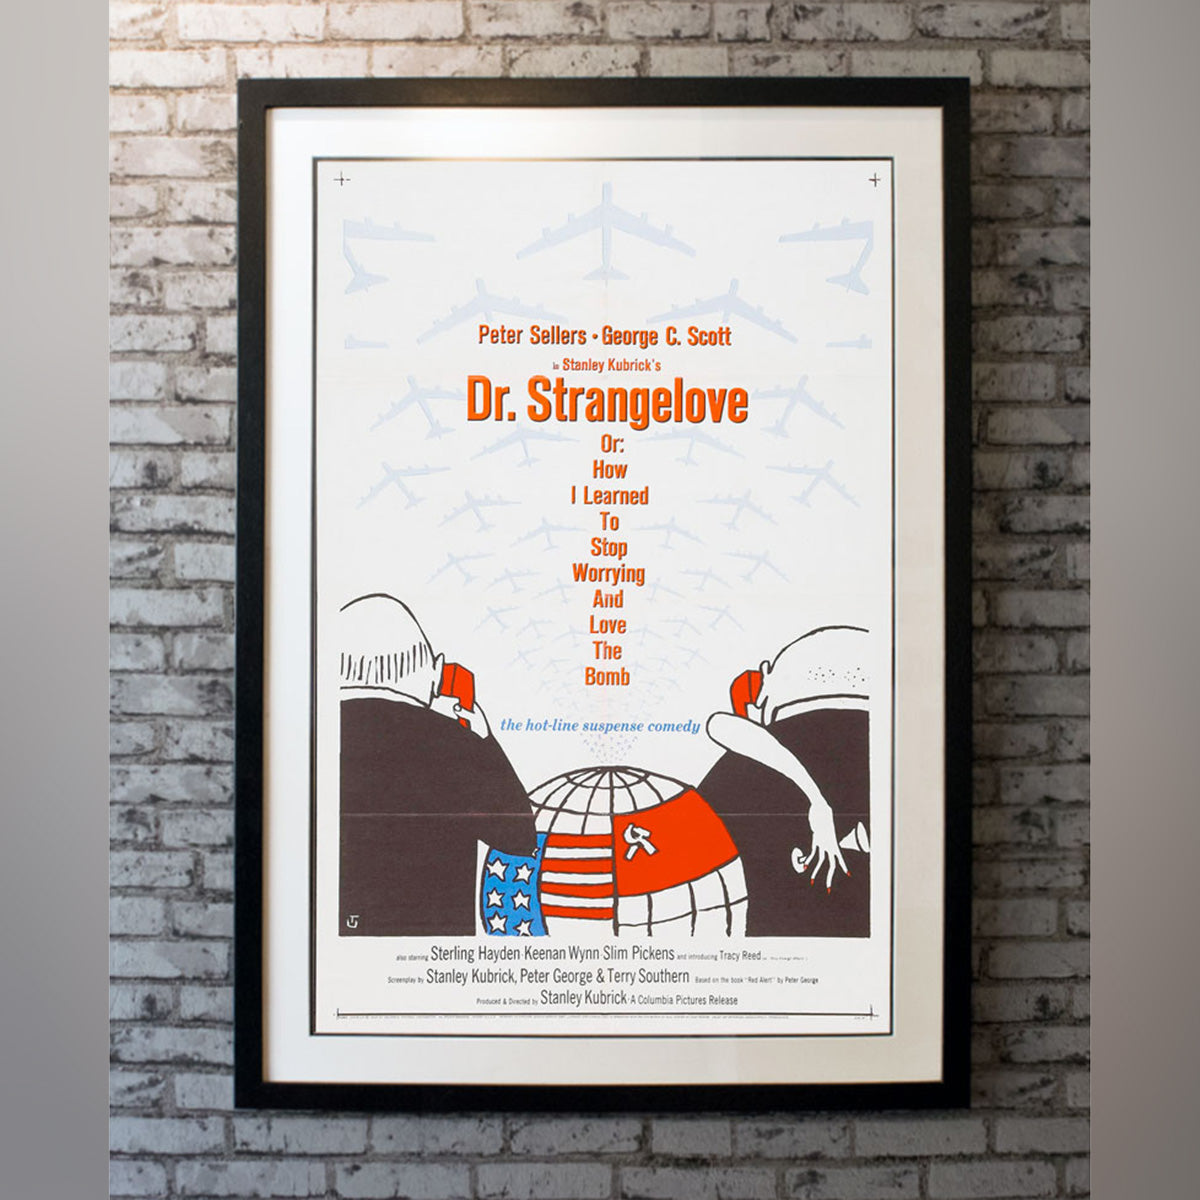 Original Movie Poster of Dr. Strangelove (1964)